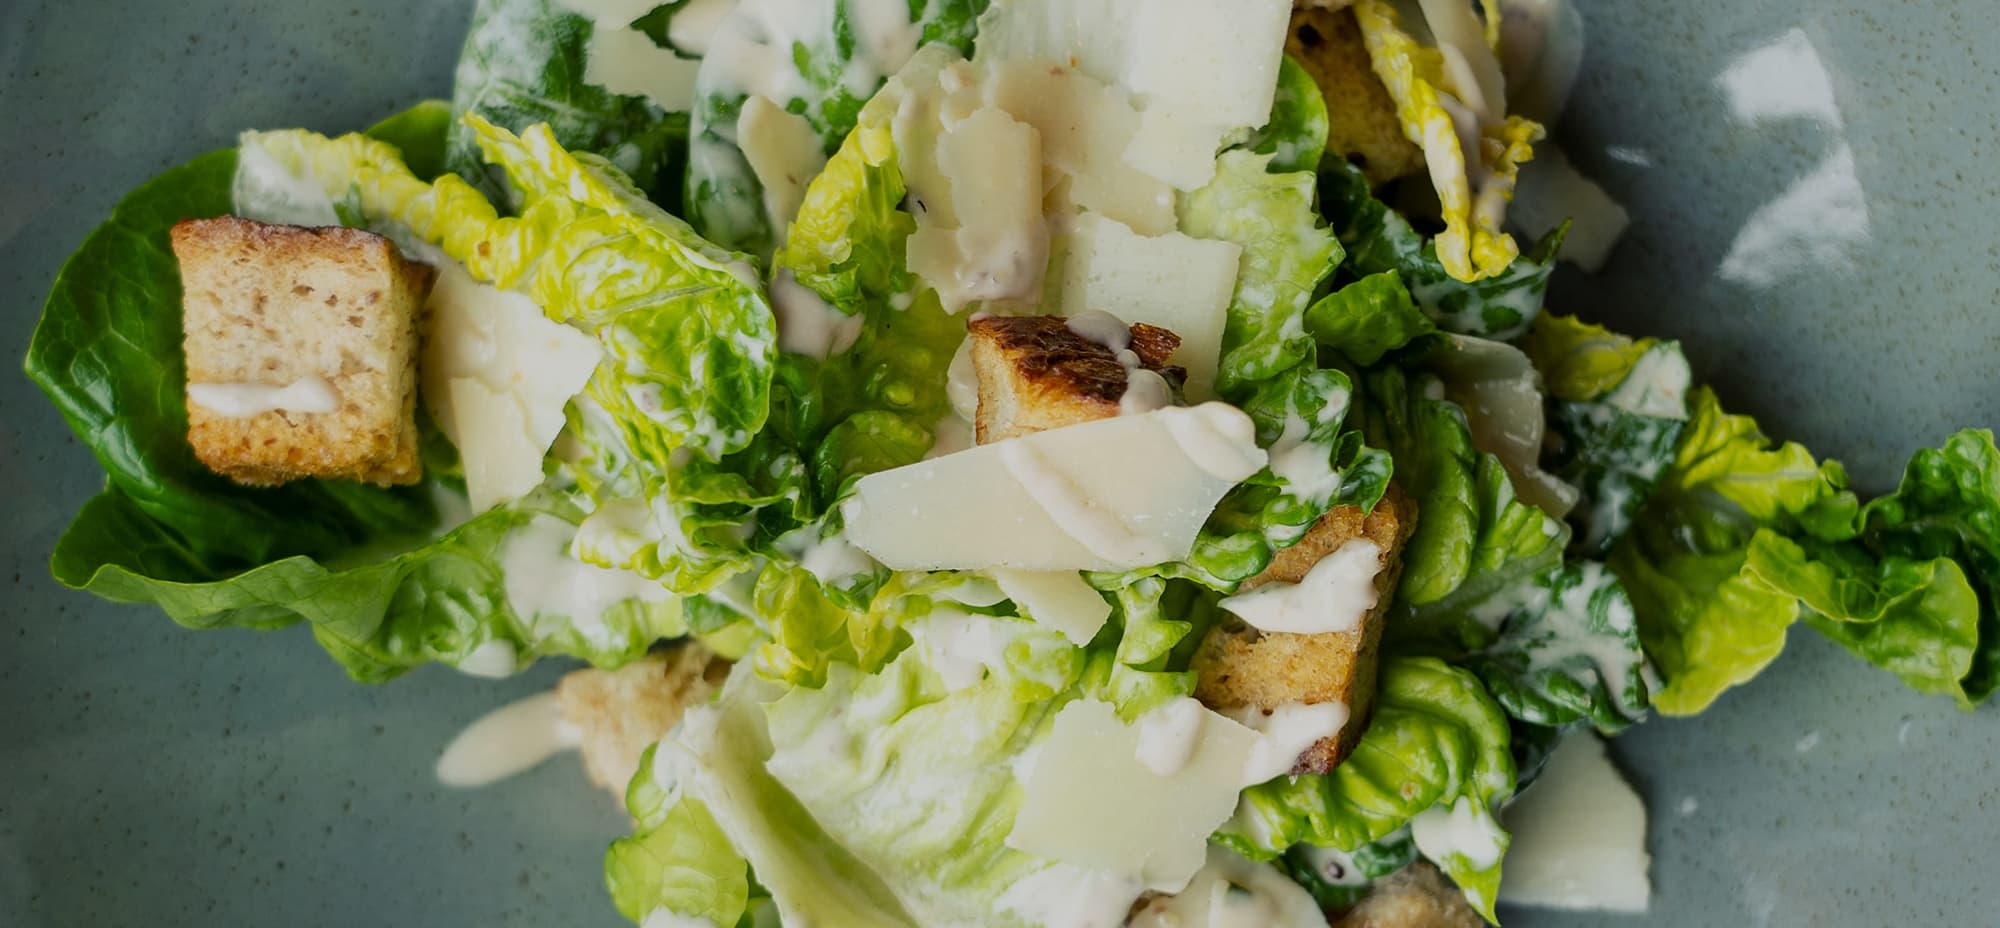 Image of a Caesar salad